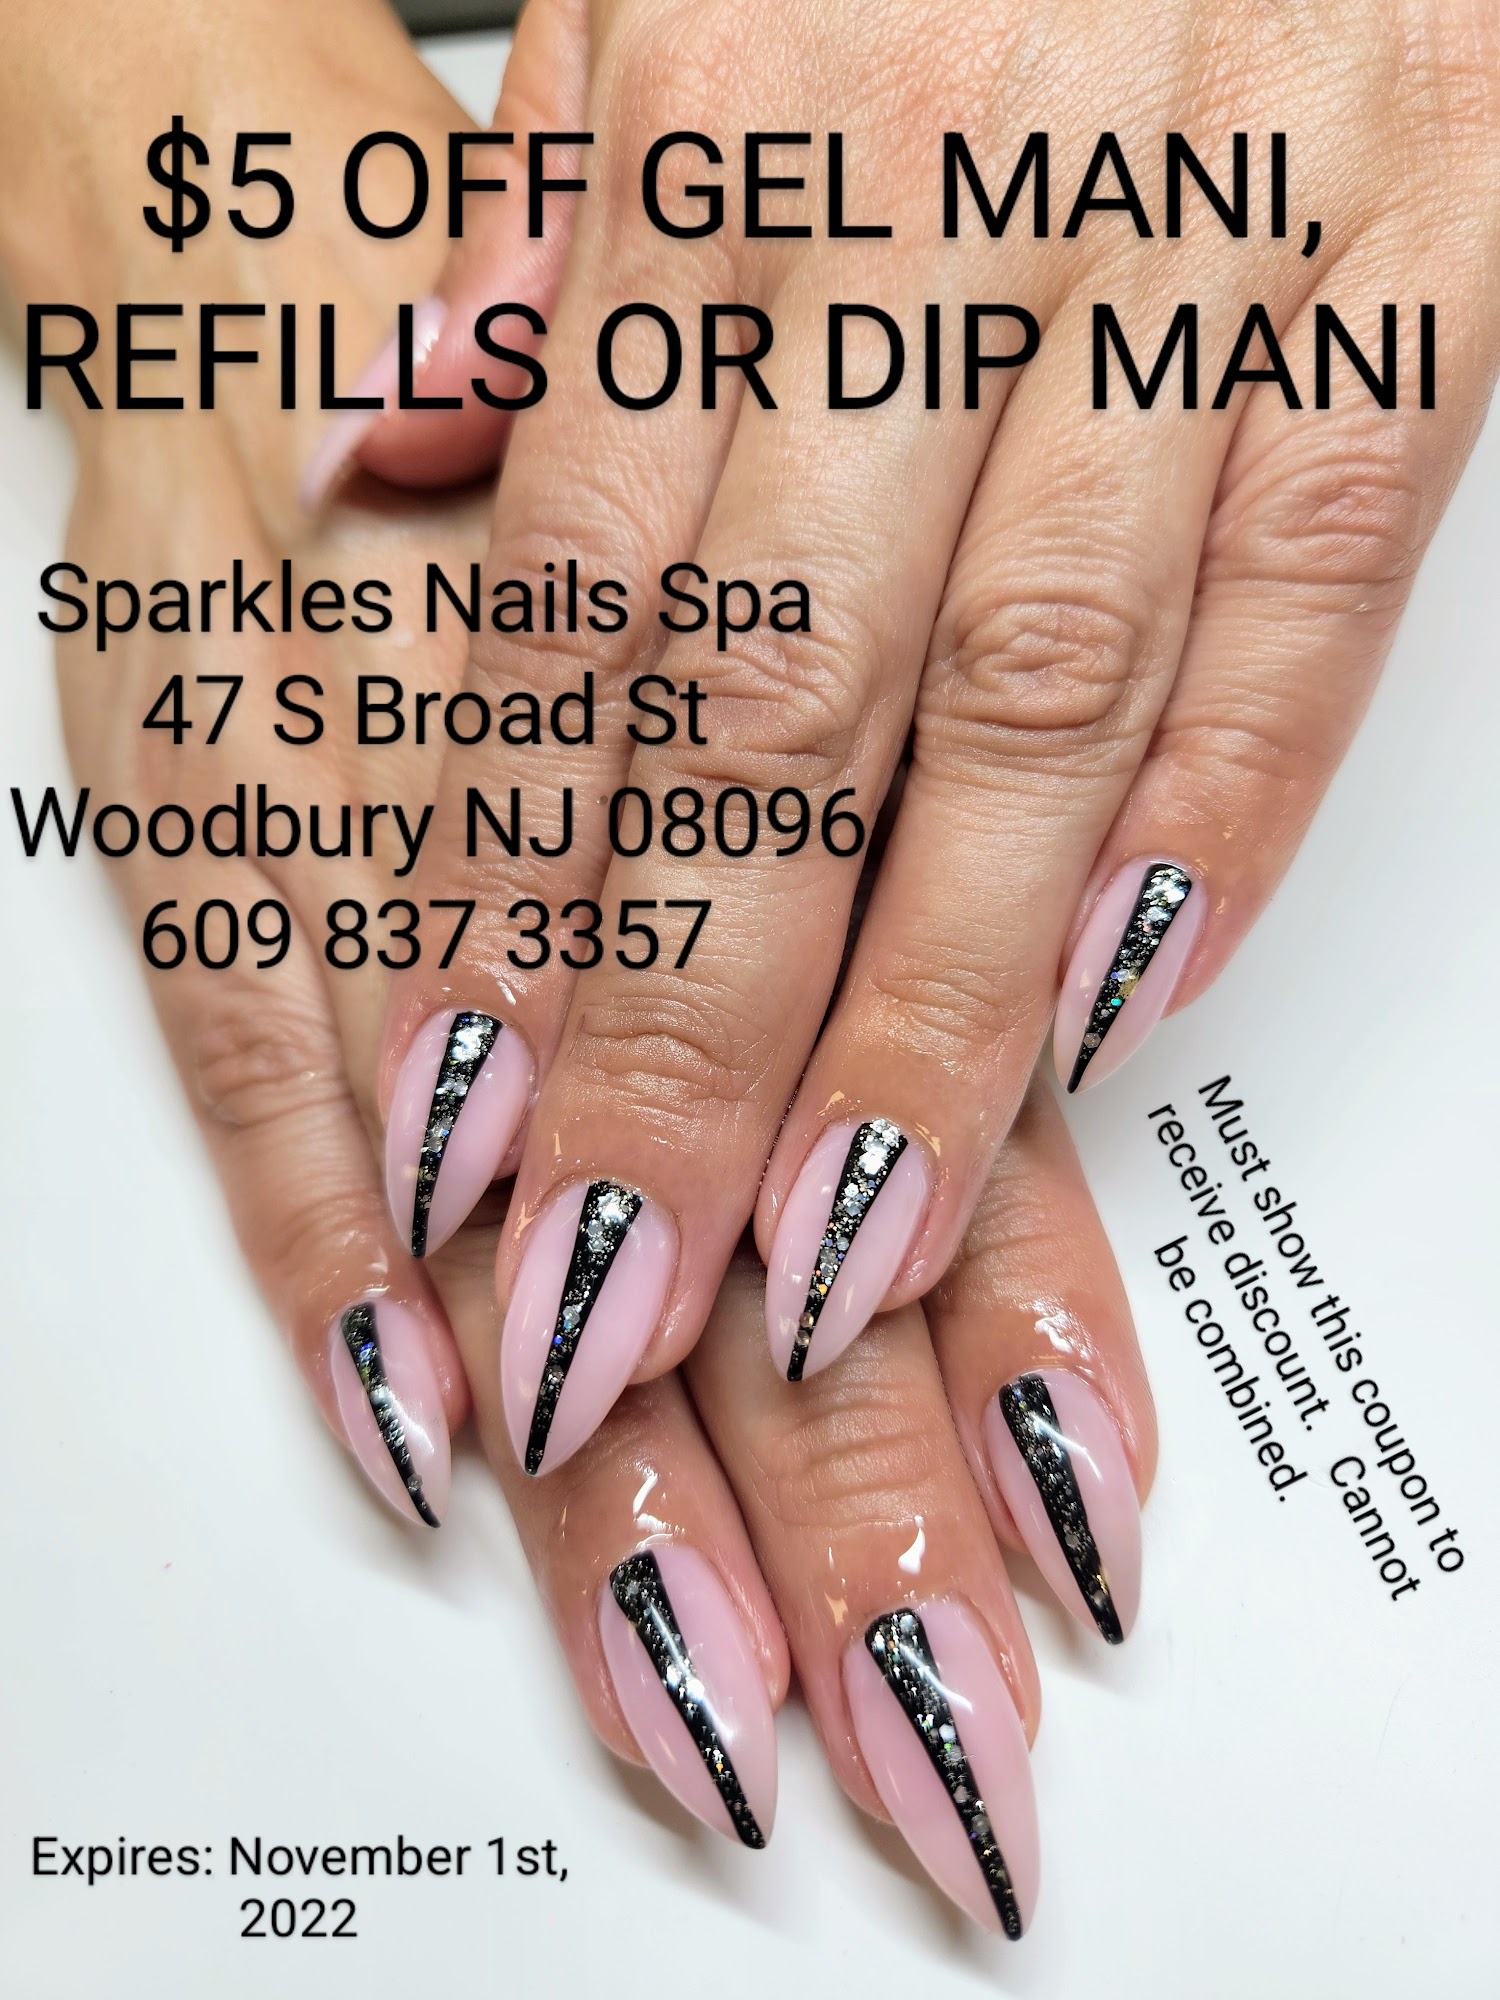 White Lotus Nails & Spa 47 S Broad St, Woodbury New Jersey 08096